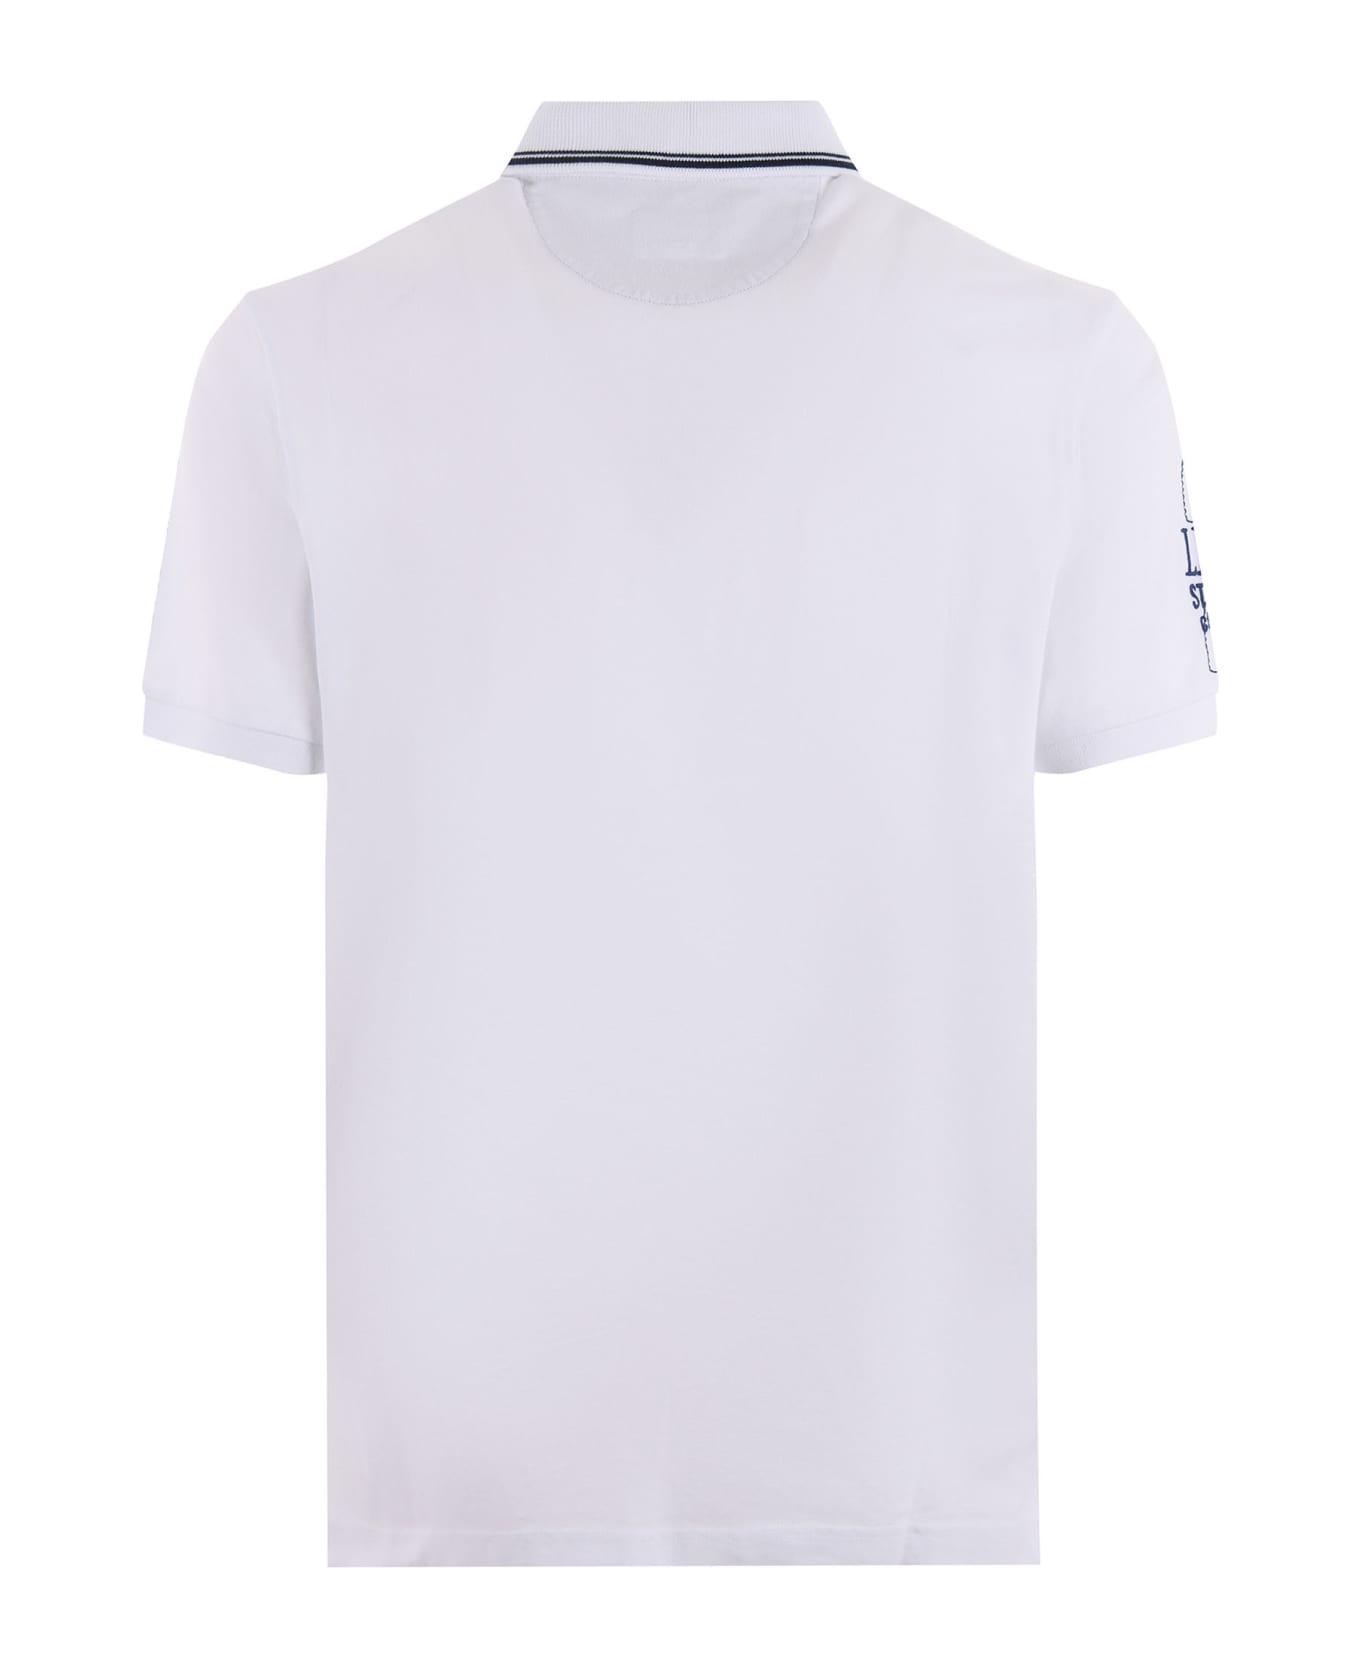 La Martina Polo Shirt - Bianco